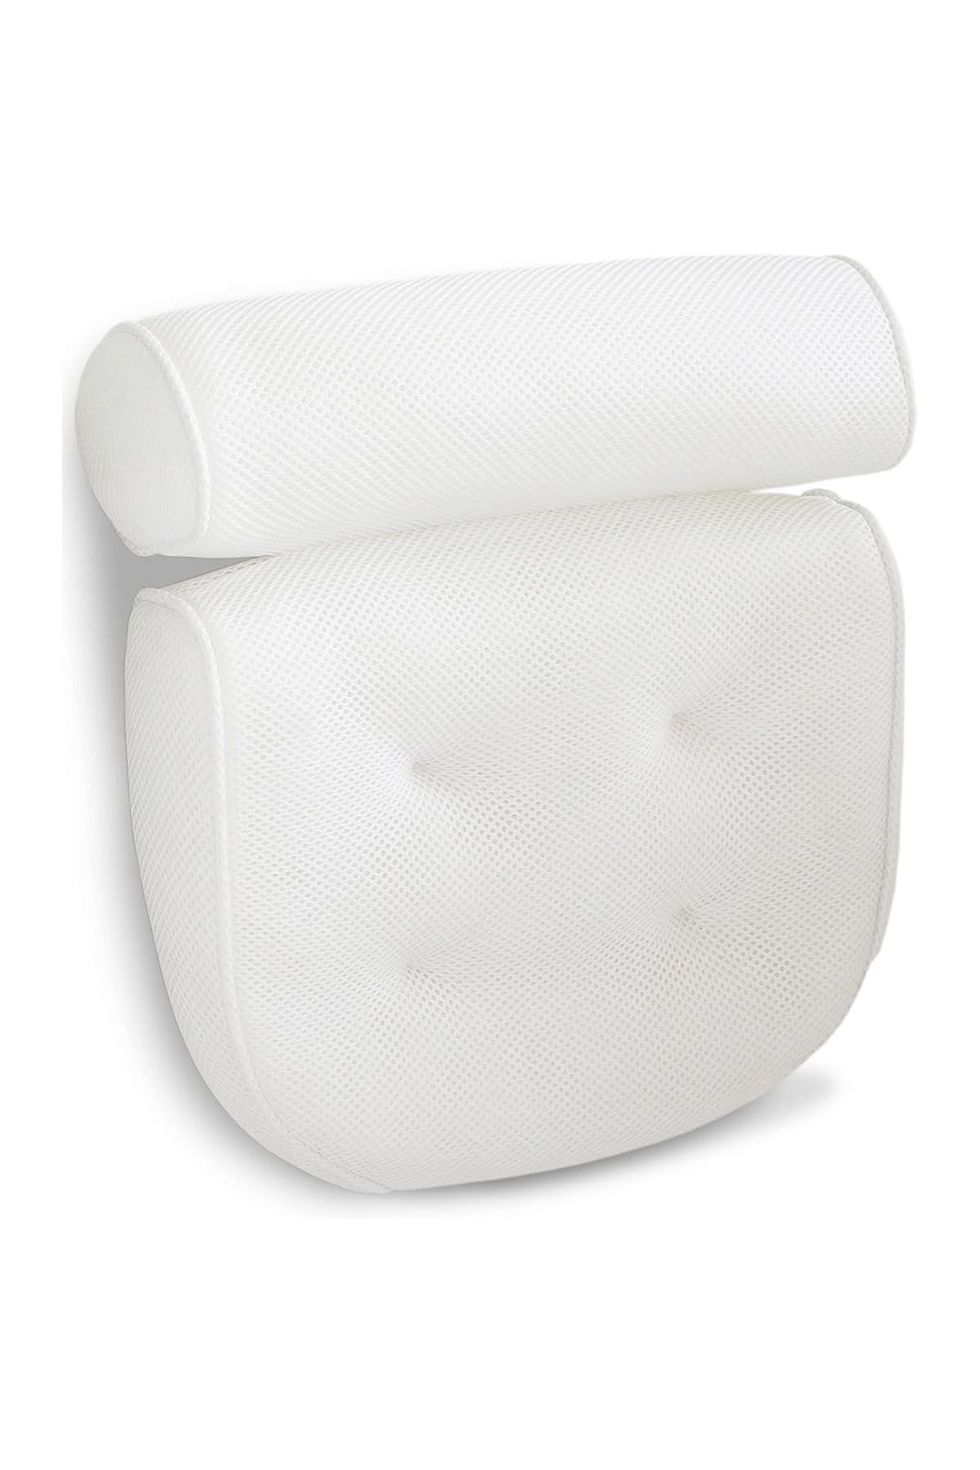  KANDOONA Bath Pillow (Extra Soft) - Bathtub Pillow